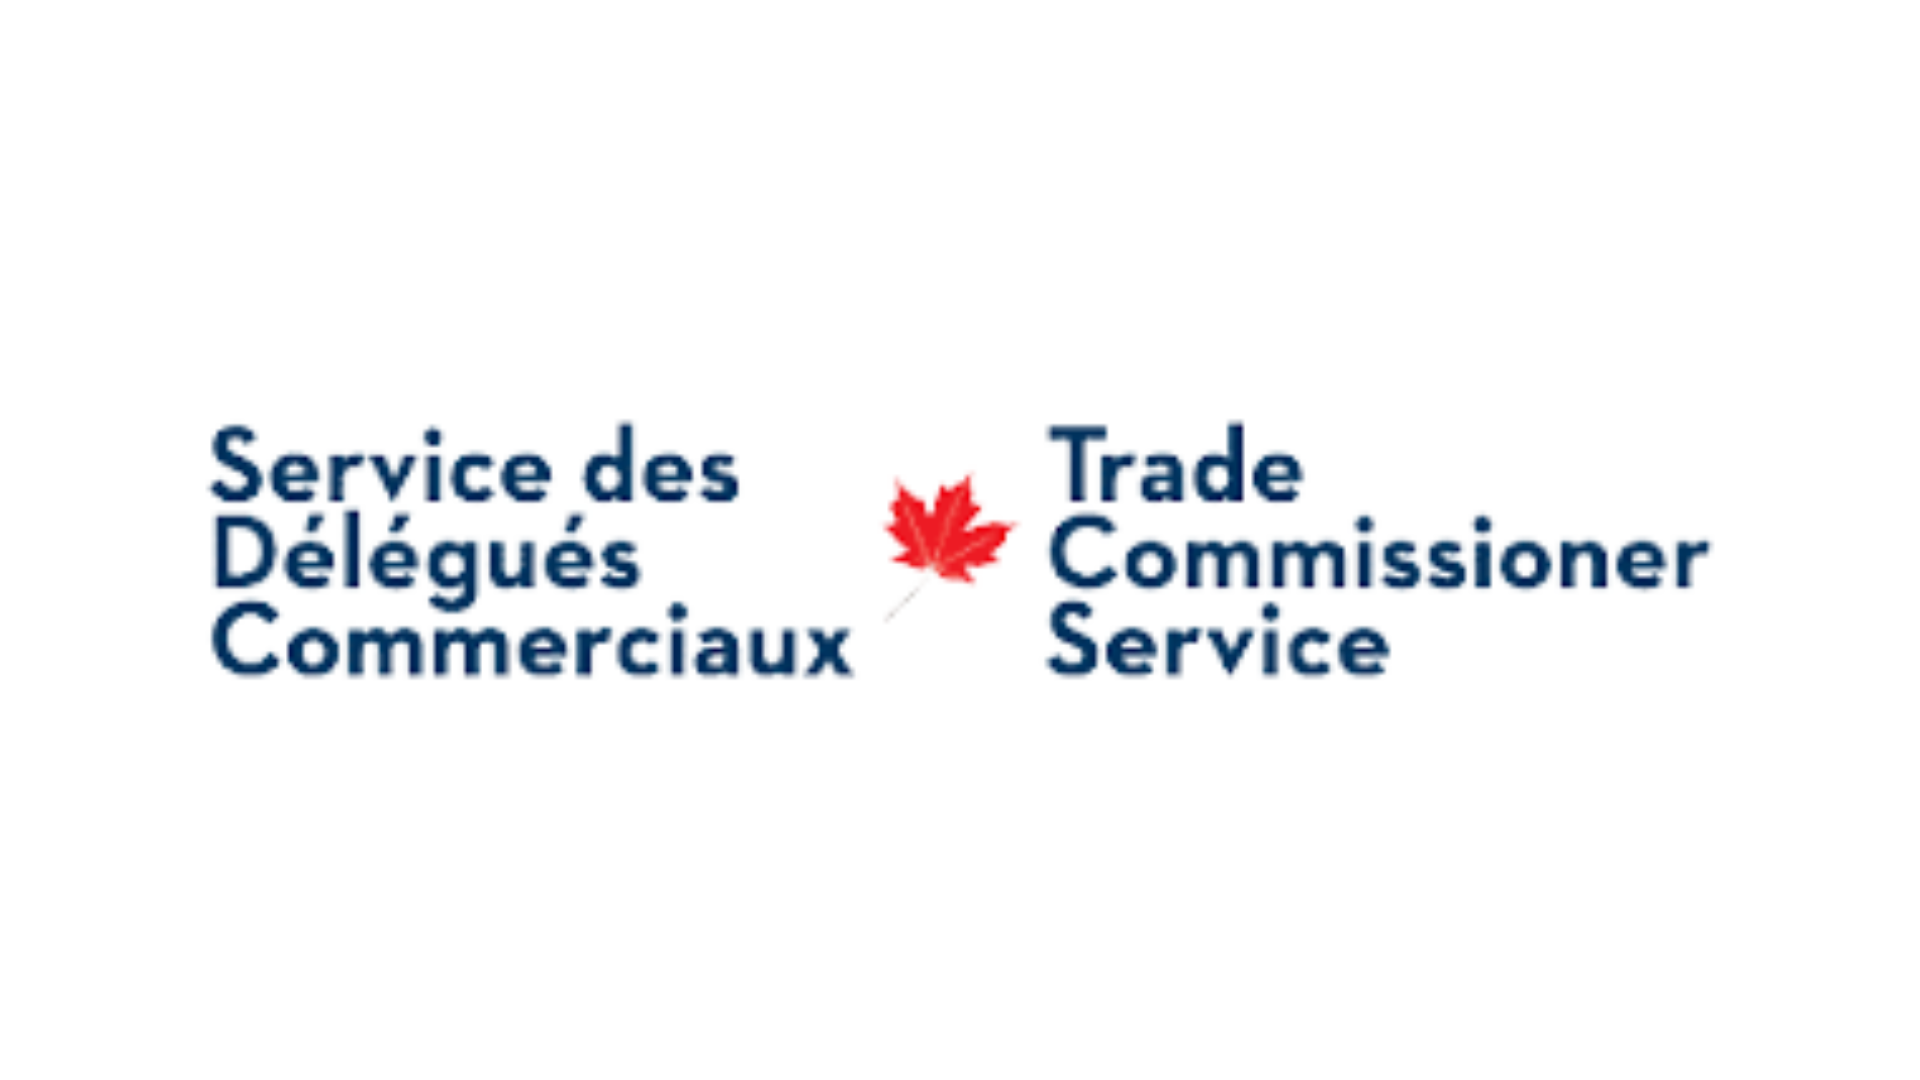 Trade Commissioner Service Logo